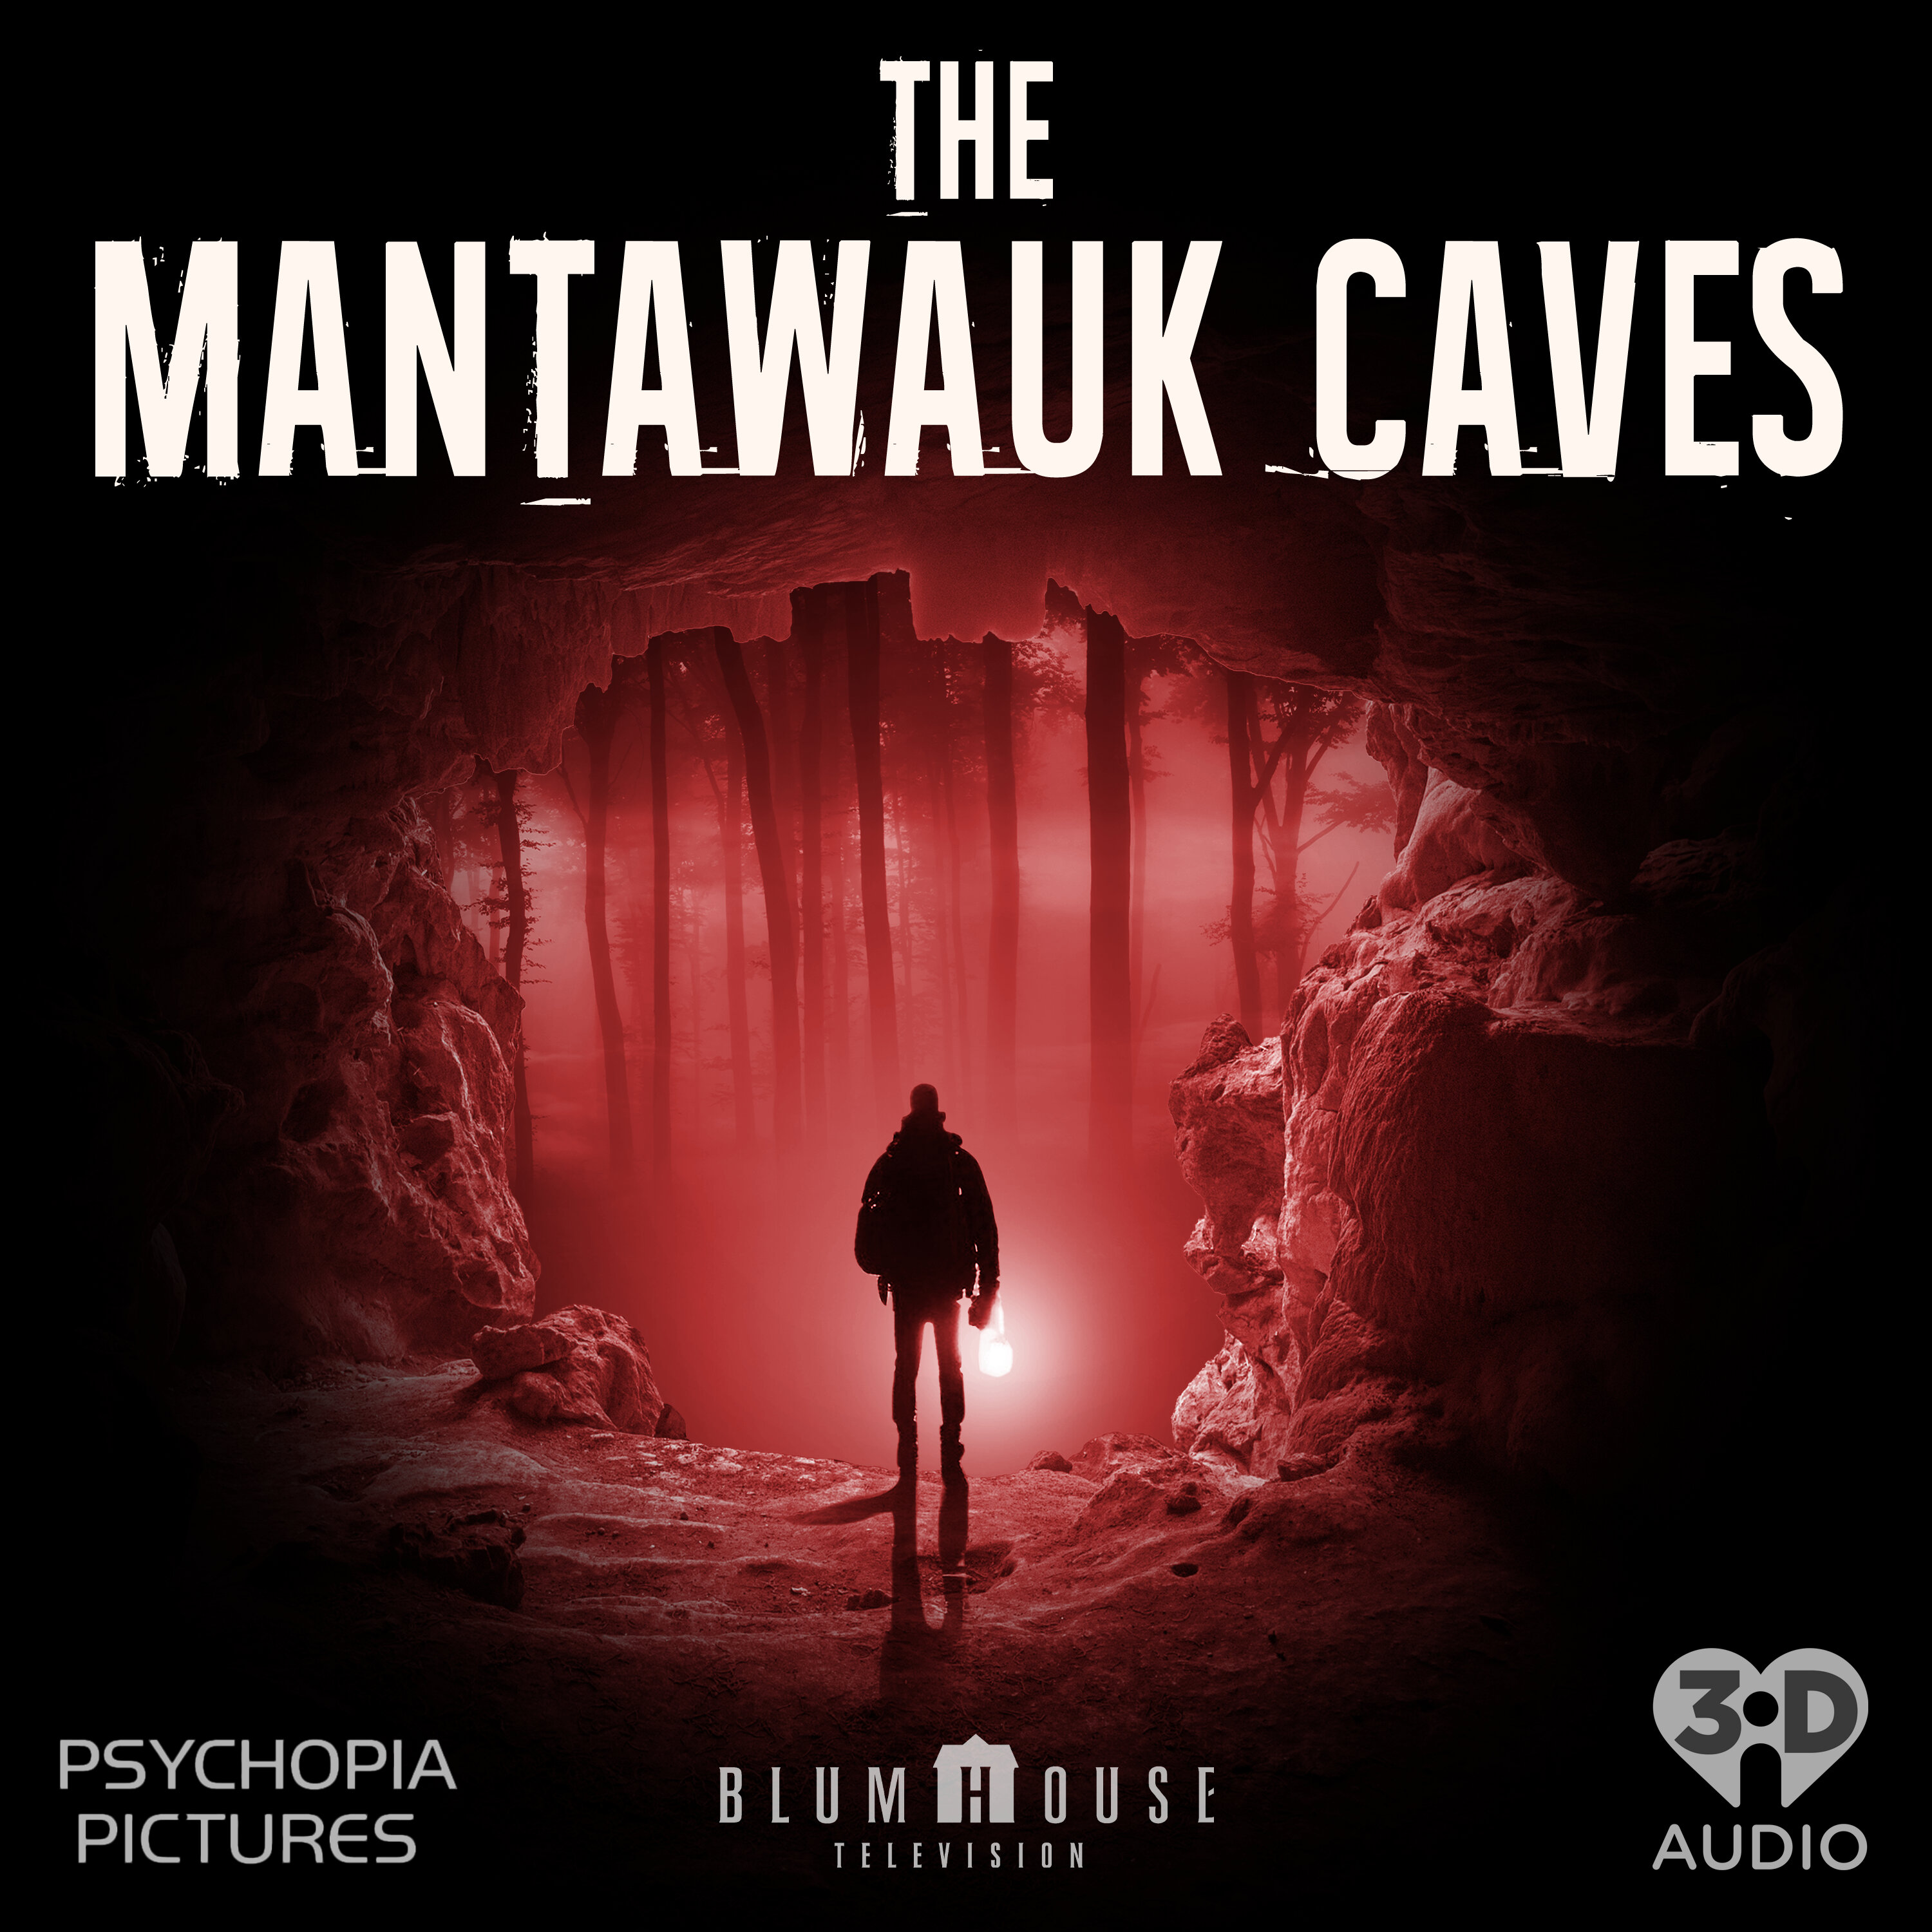 The Mantawauk Caves podcast show image